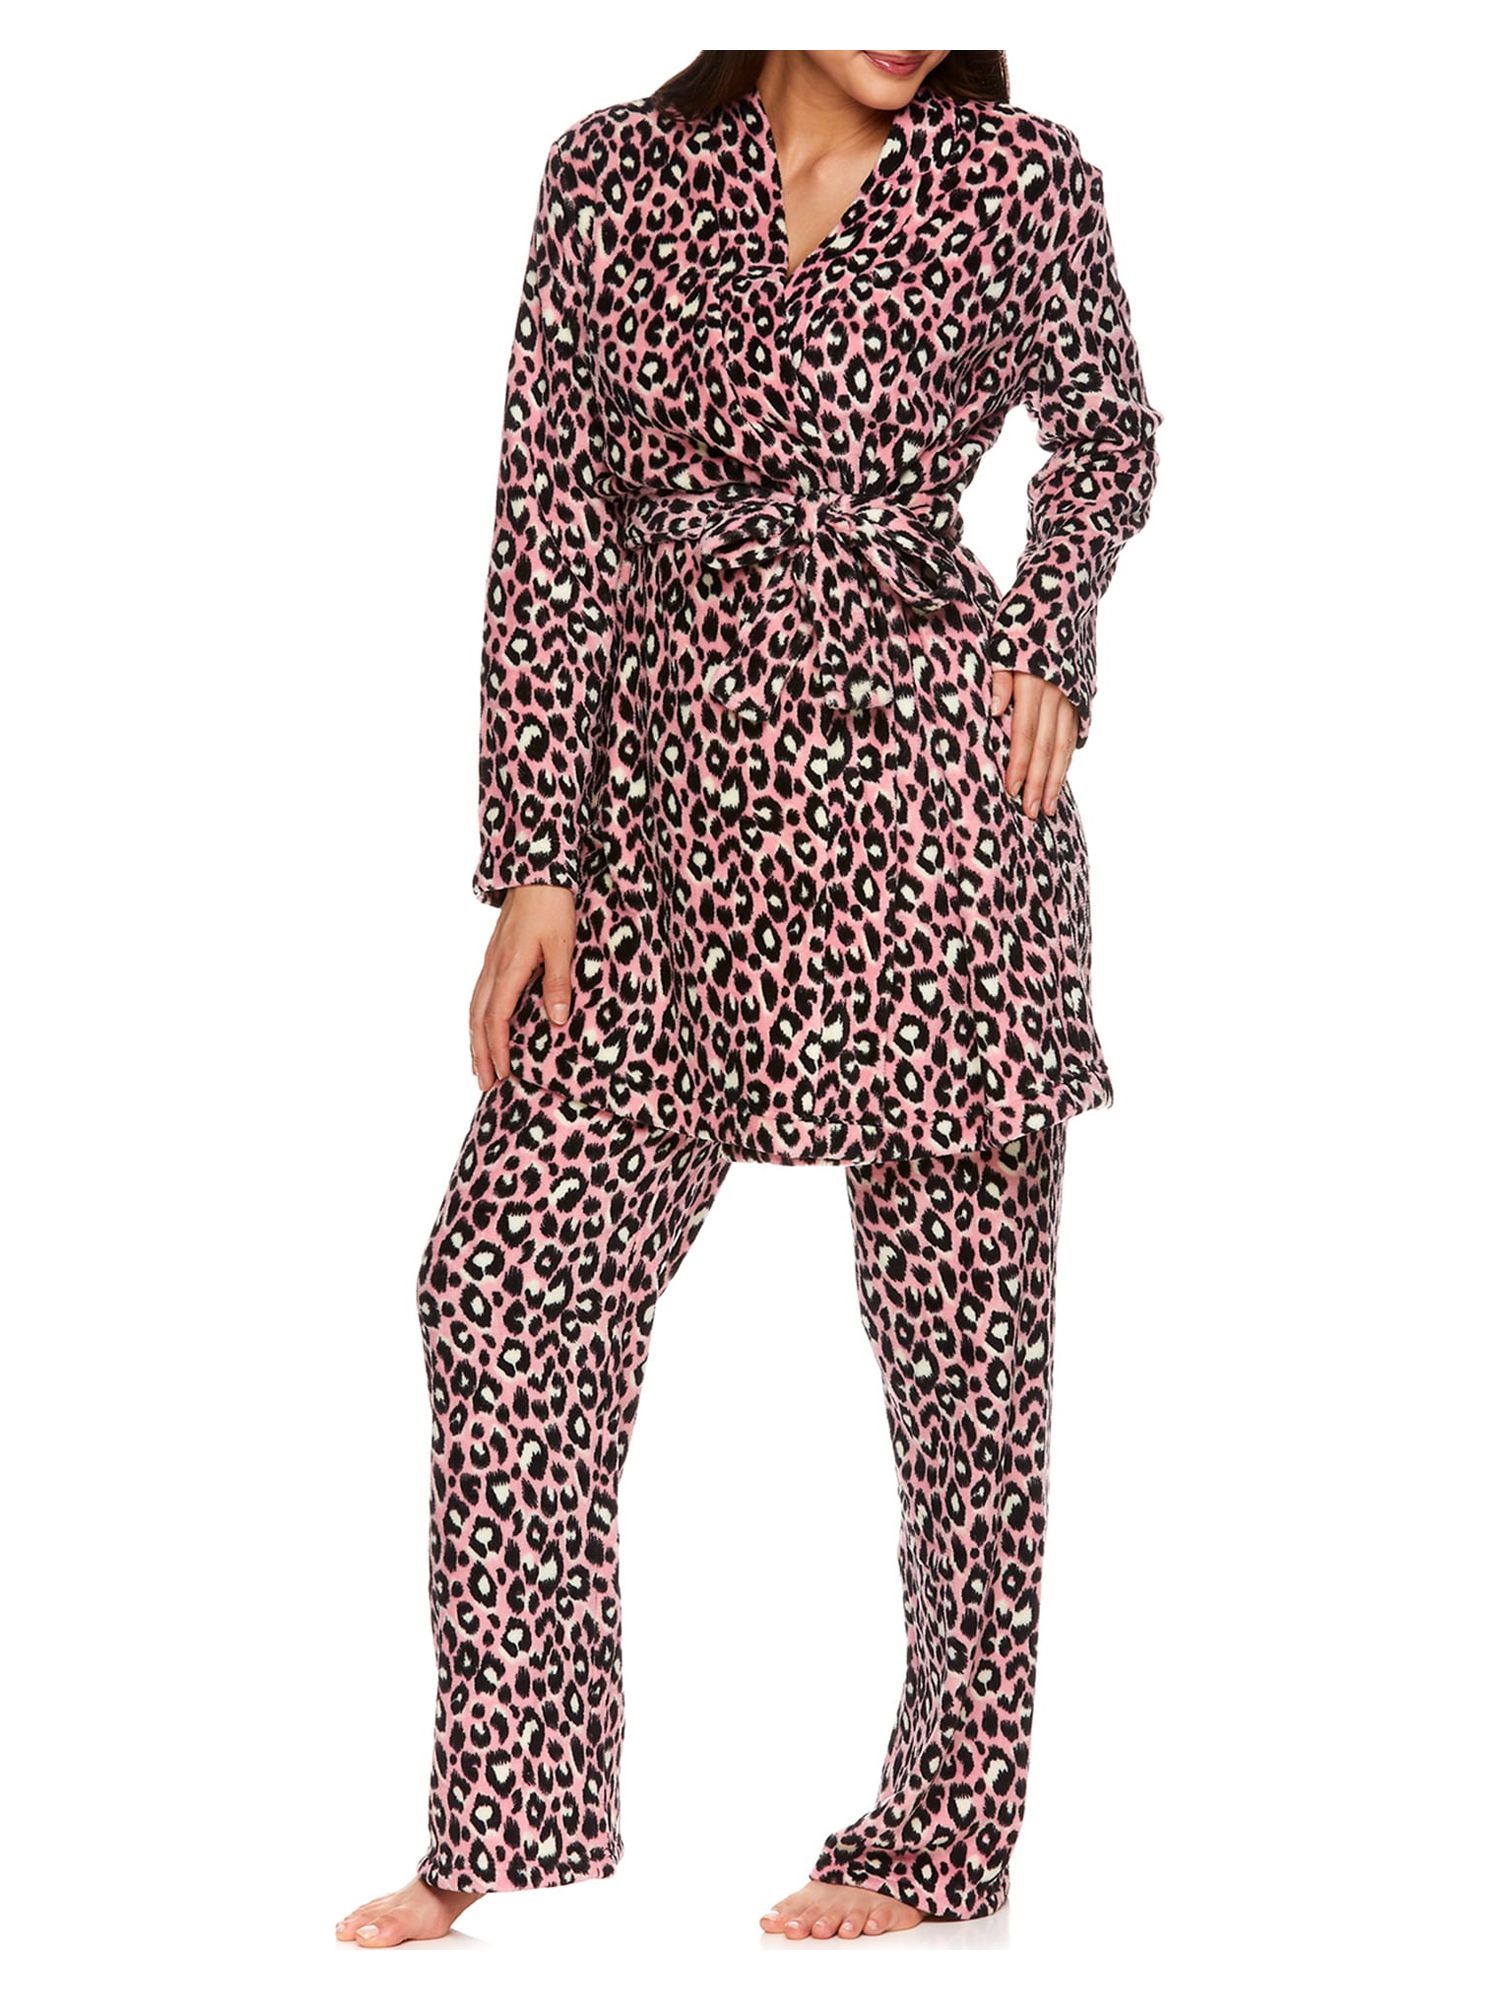 Sleep & Co. Women's & Women's Plus Plush Robe and Pajama Pant 2pc Set - image 5 of 6